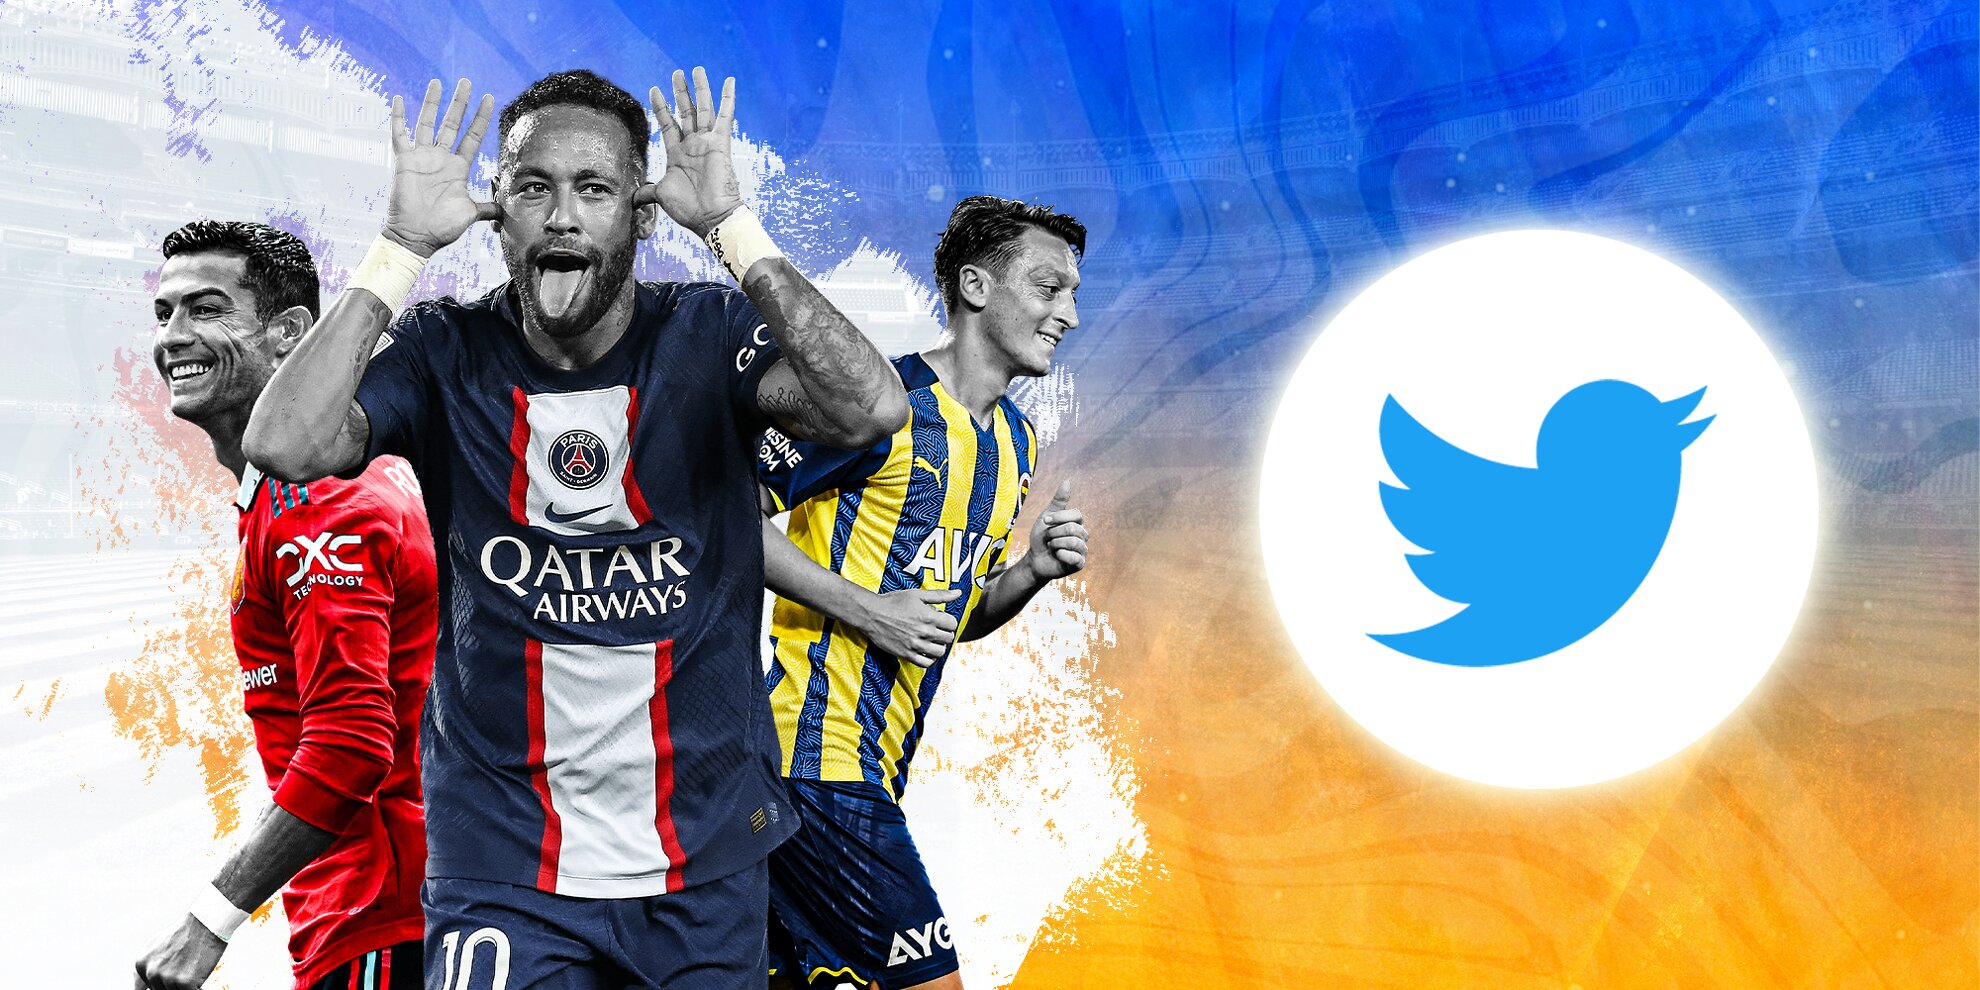 Top 10 most followed footballers on Twitter in 2022